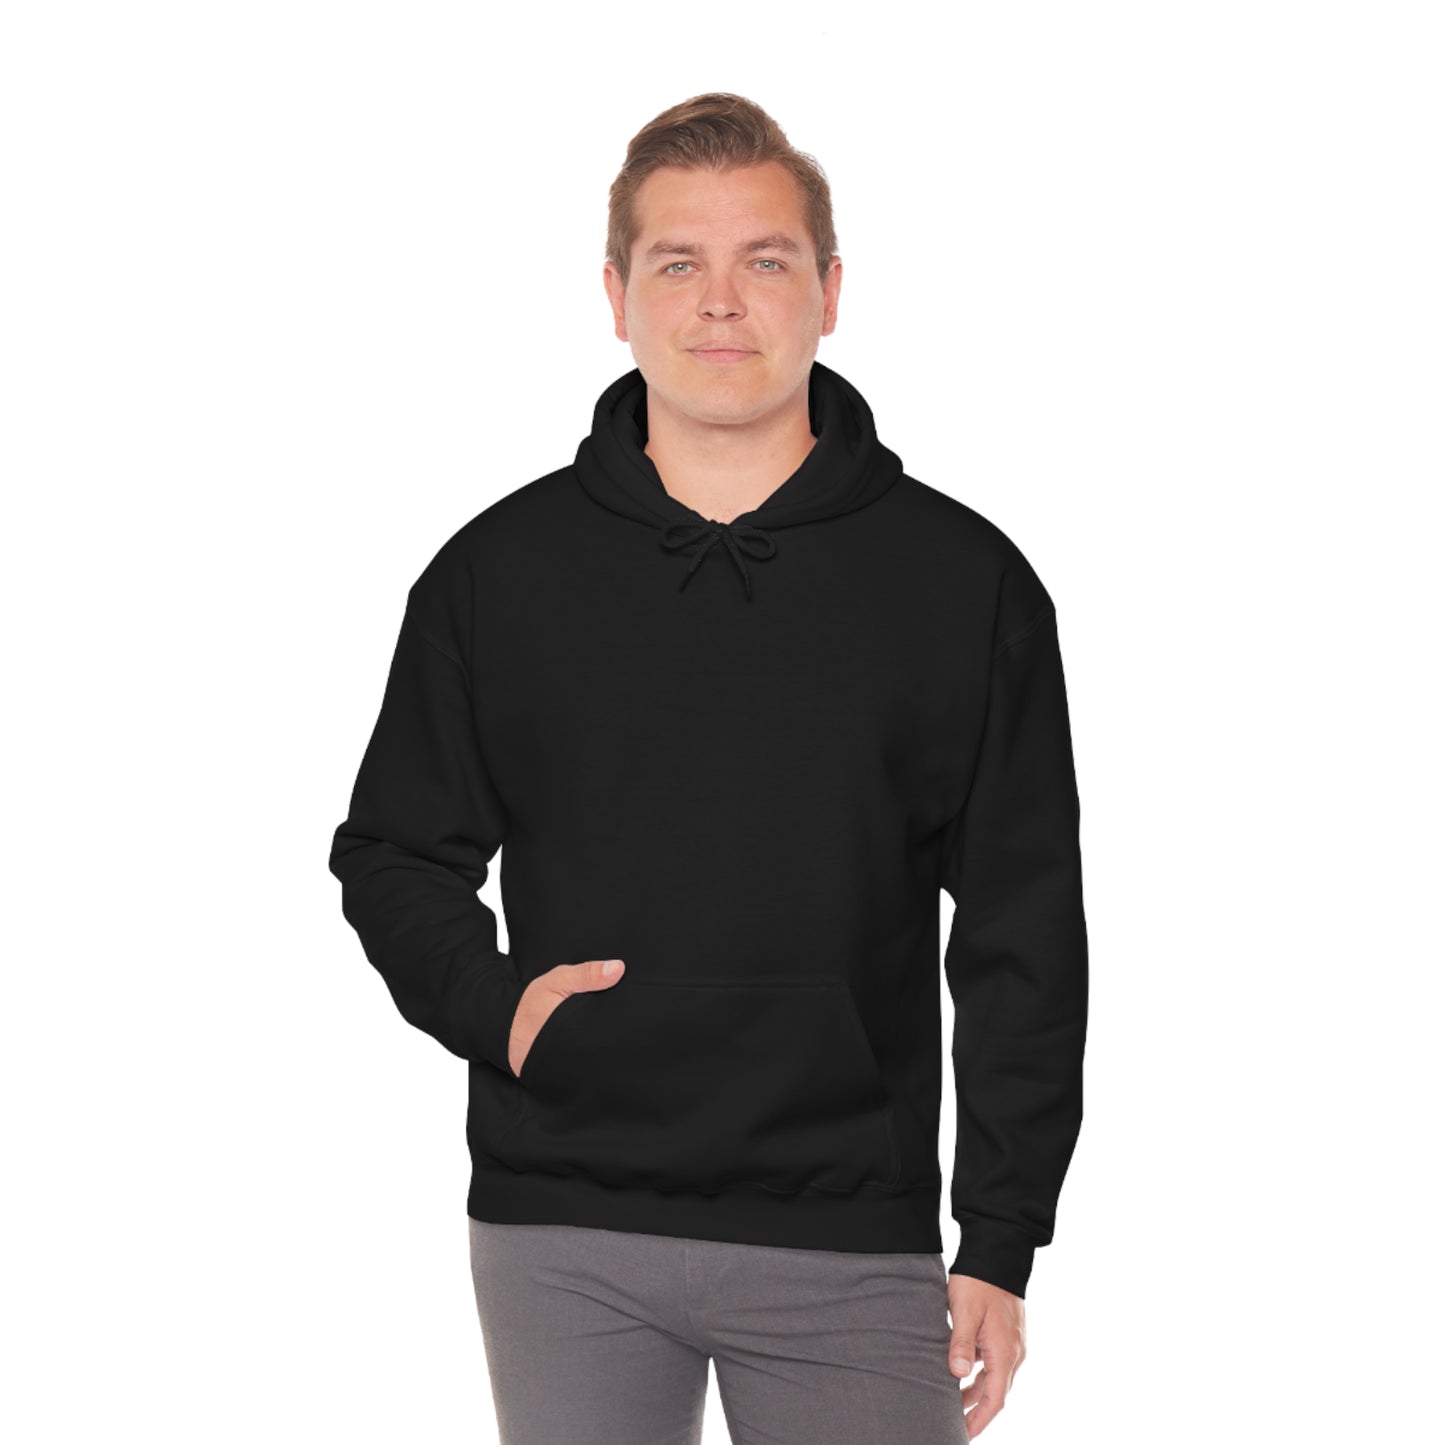 super car Unisex Heavy Blend™ Hooded Sweatshirt